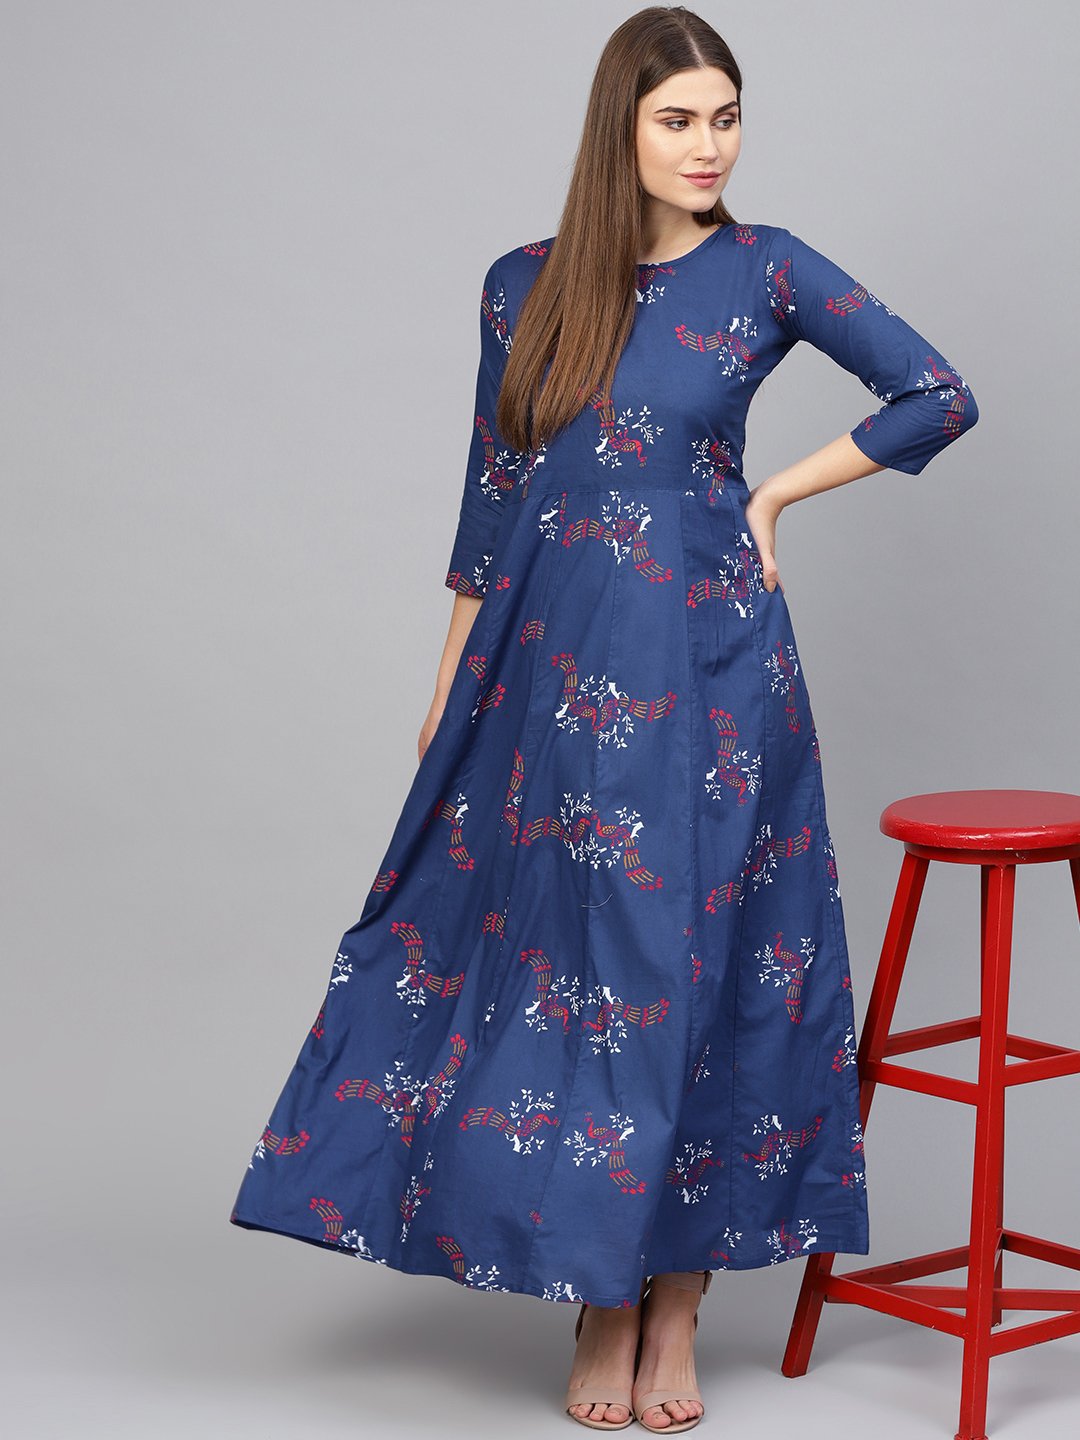 Women's Navy Blue & Pink Printed Maxi Dress - Nayo Clothing